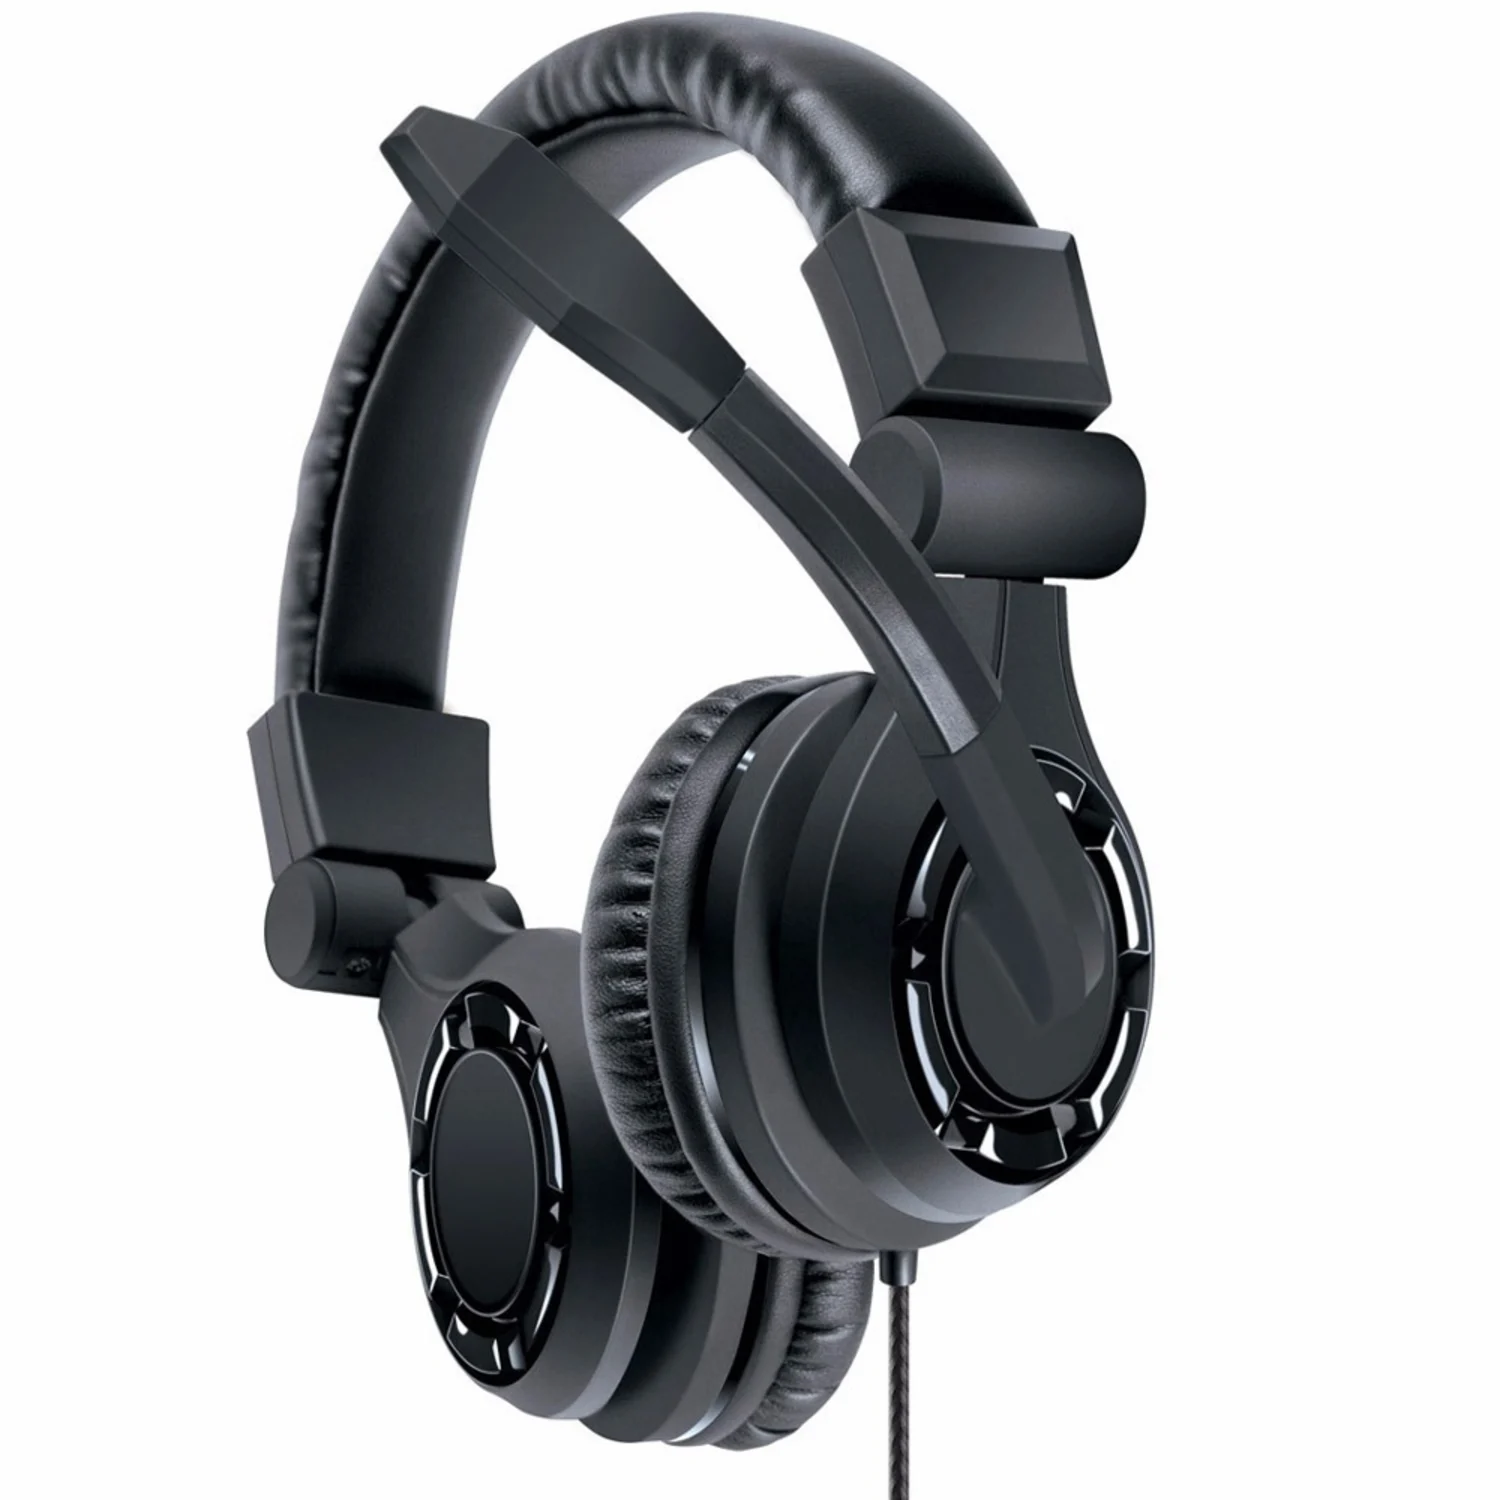 Headset Dreamgear Grx-350 Stereo